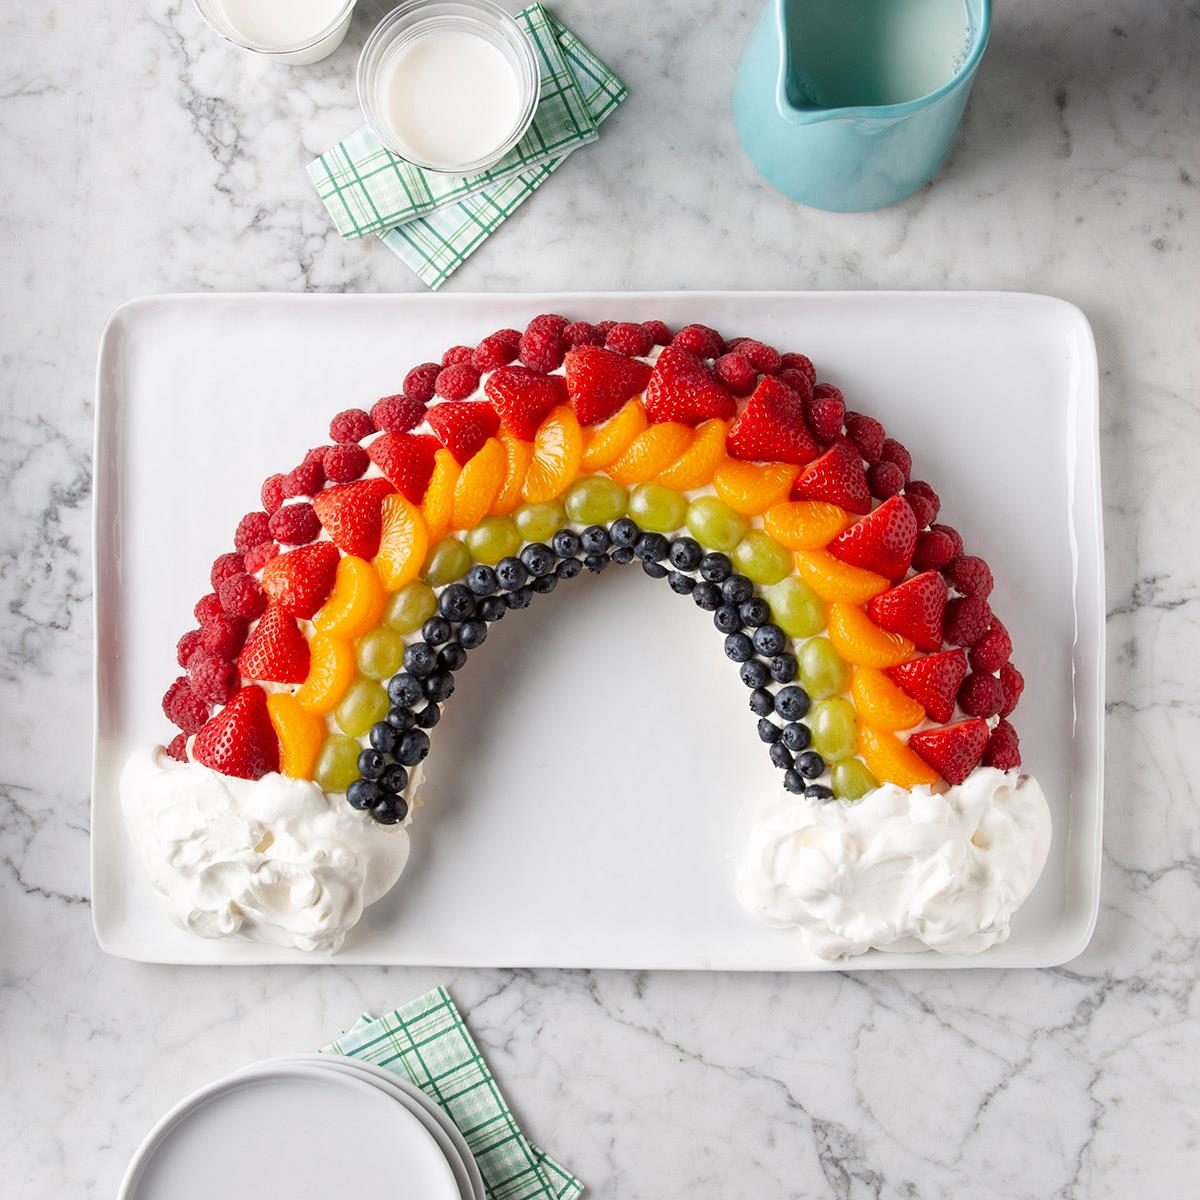 Rainbow Cake - Zest Food